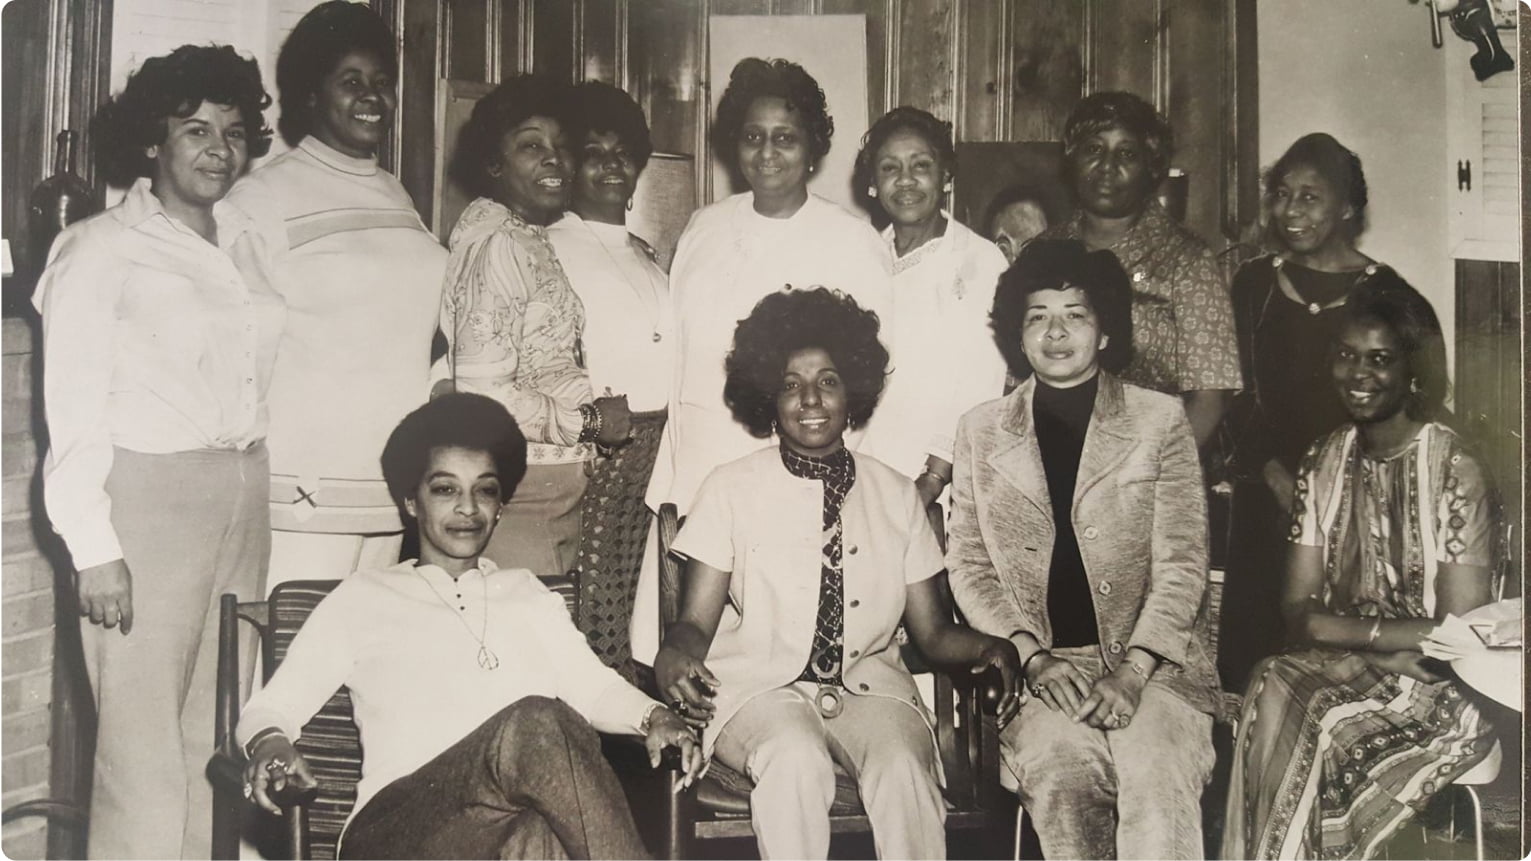 Group photo of the National Black Nurses Association (NBNA) founders